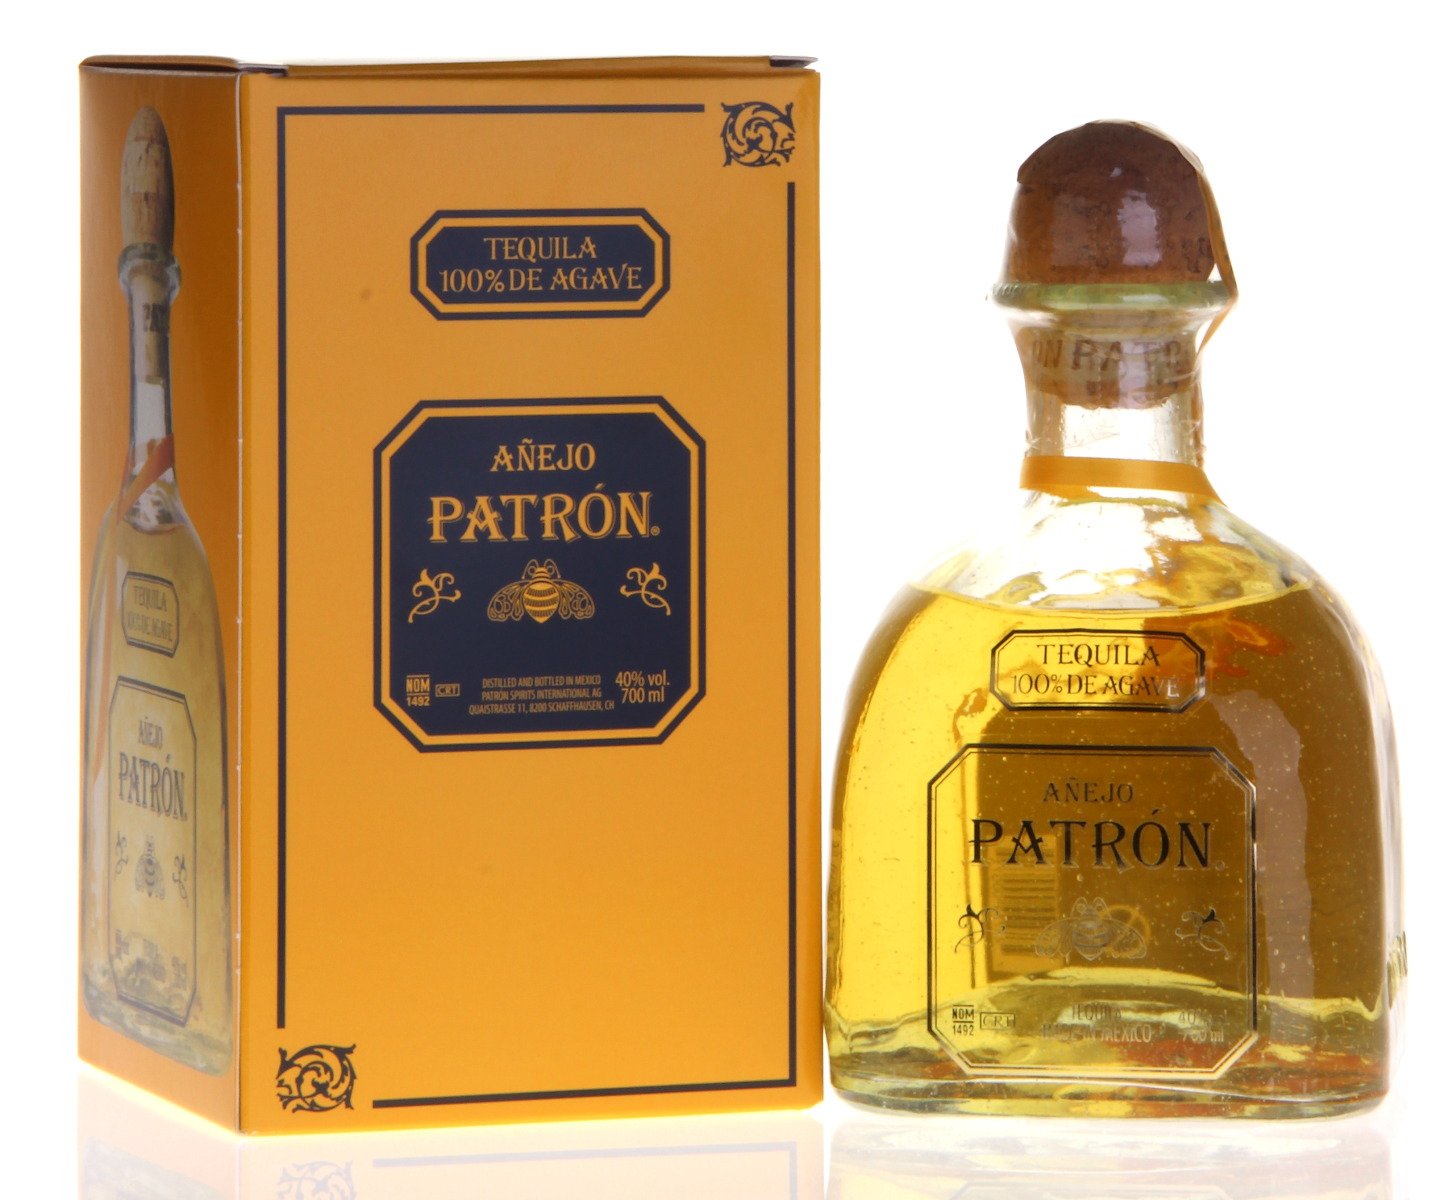 PATRóN Añejo Tequila 100% Agave, 51,99, 700ml